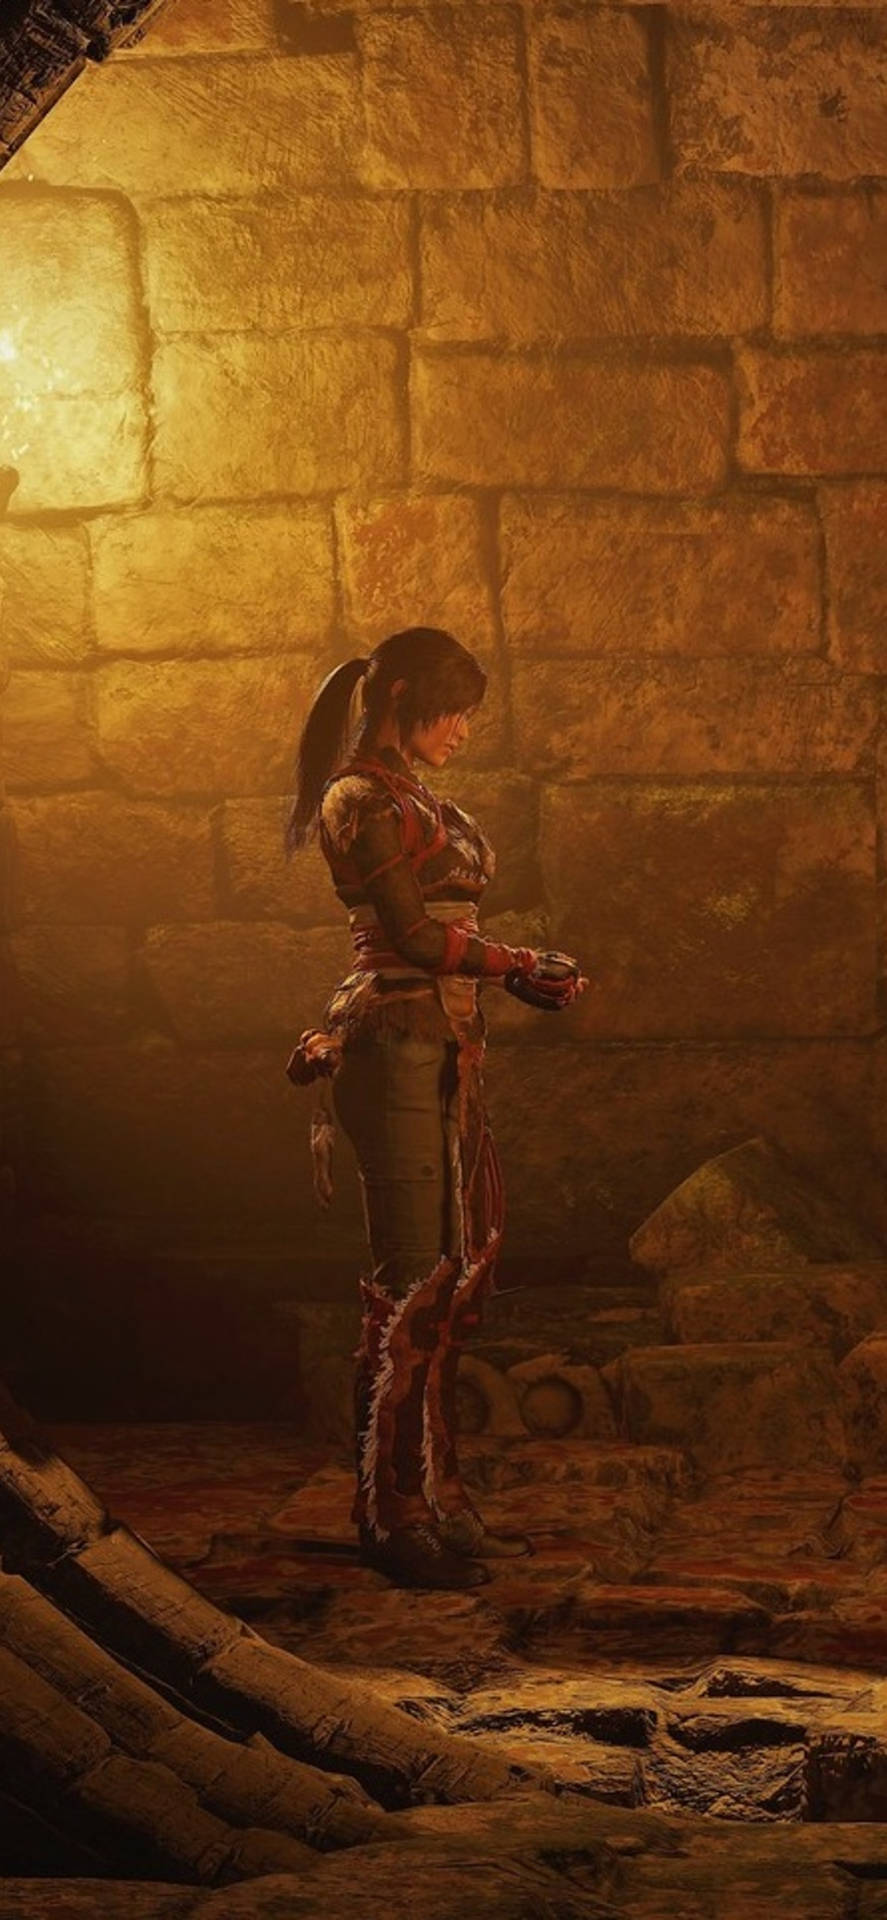 Lara In Cave Tomb Raider Iphone Wallpaper